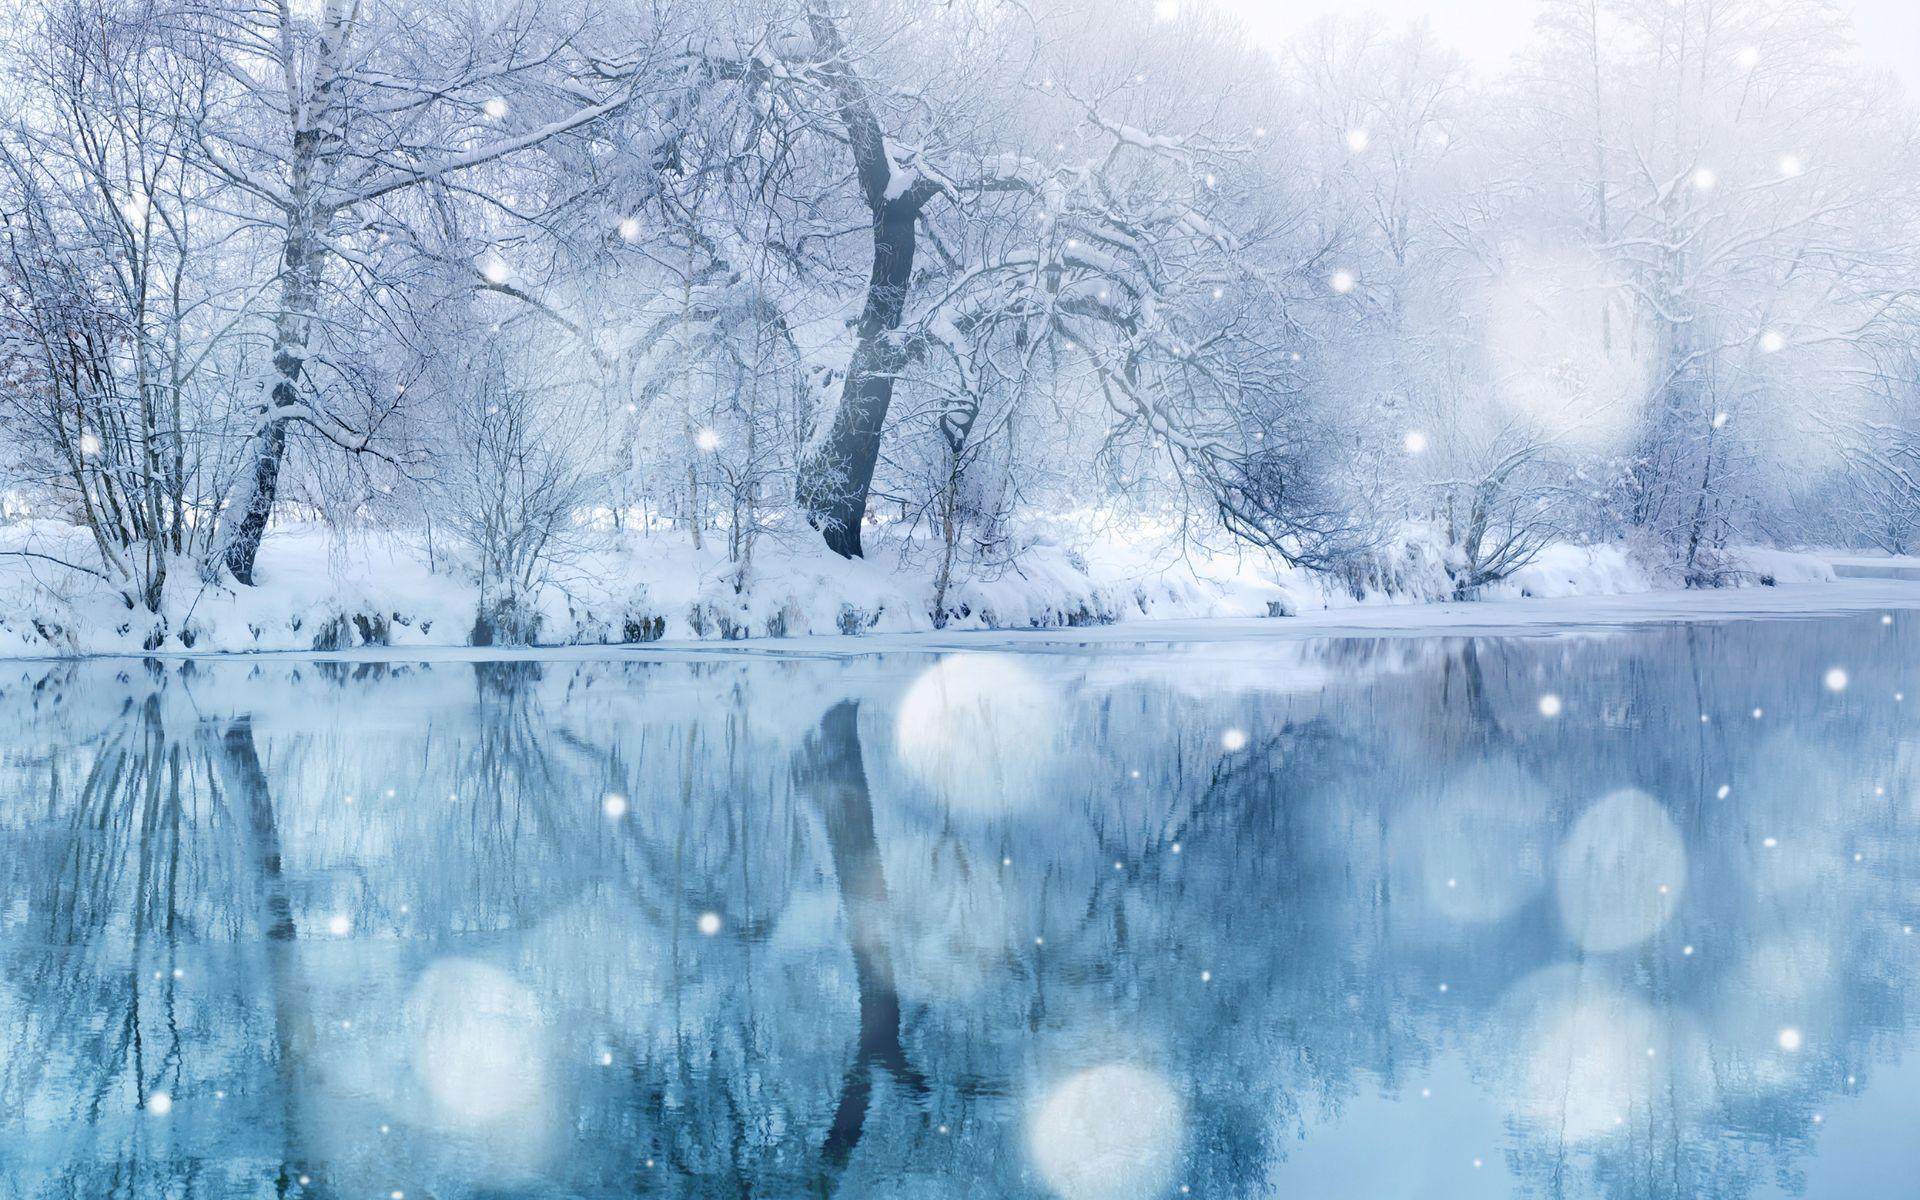 Snow River Winter Landscape Widescreen Wallpaper. Winter wallpaper, Winter facebook covers, Snowfall wallpaper